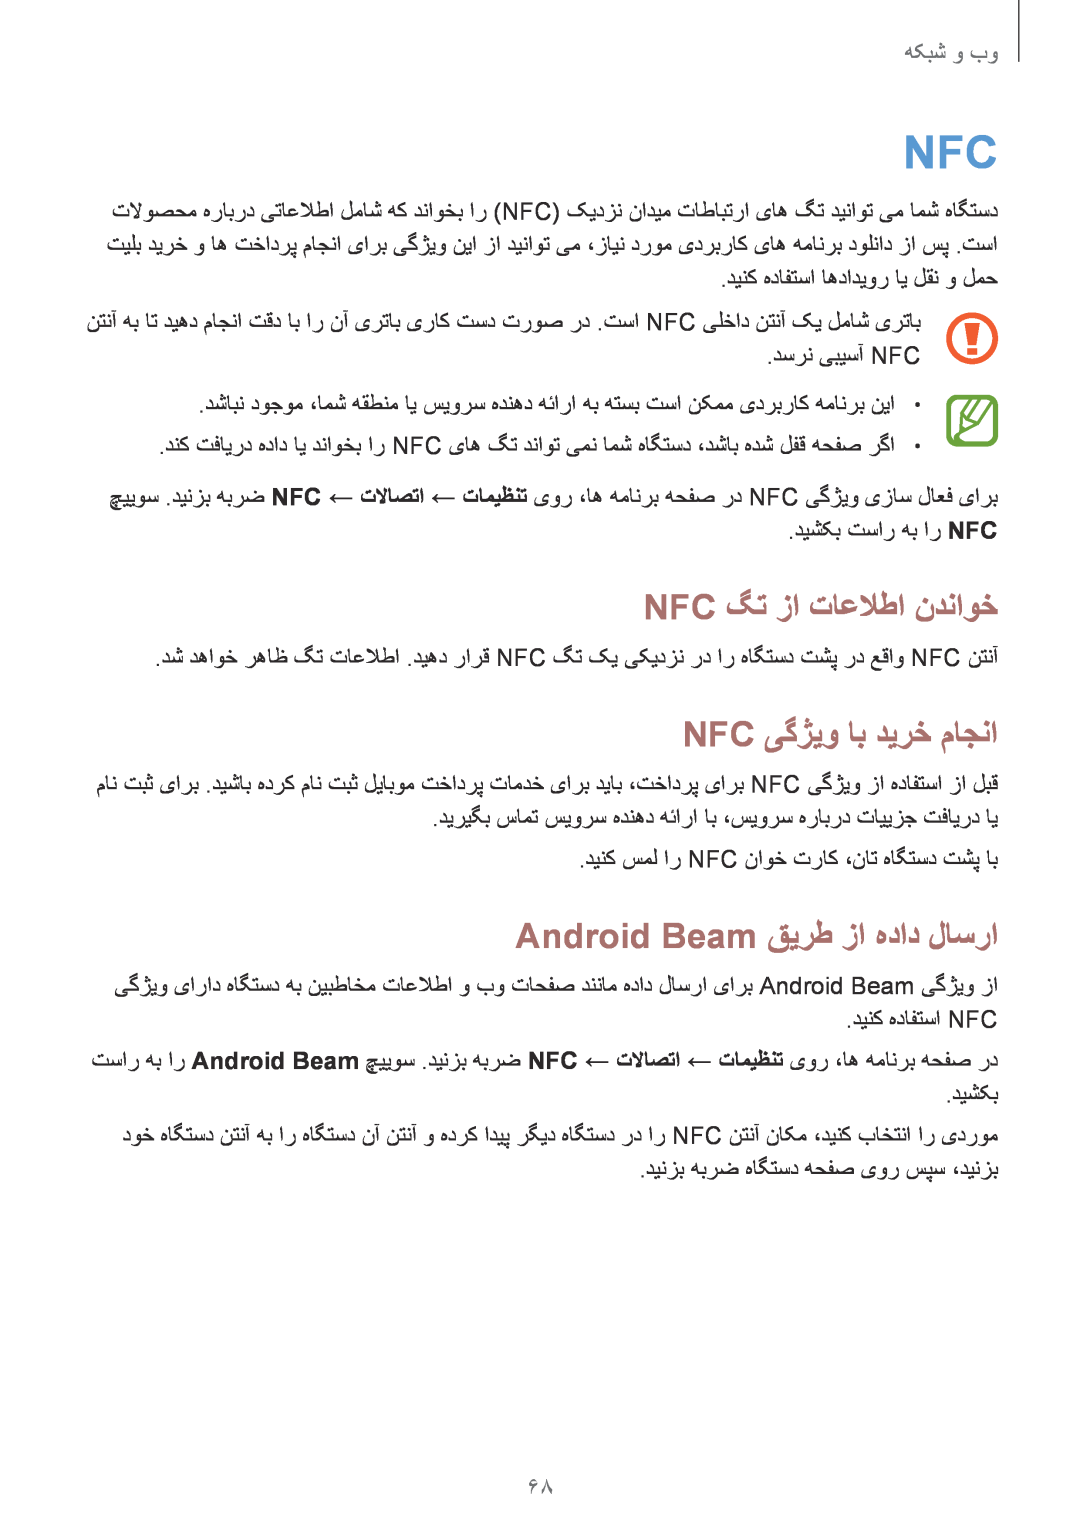 Samsung GT-I9300MBIPAK manual Nfc گت زا تاعلاطا ندناوخ, Nfc یگژیو اب دیرخ ماجنا, Android Beam قیرط زا هداد لاسرا, وٜ شٜ꤆ 